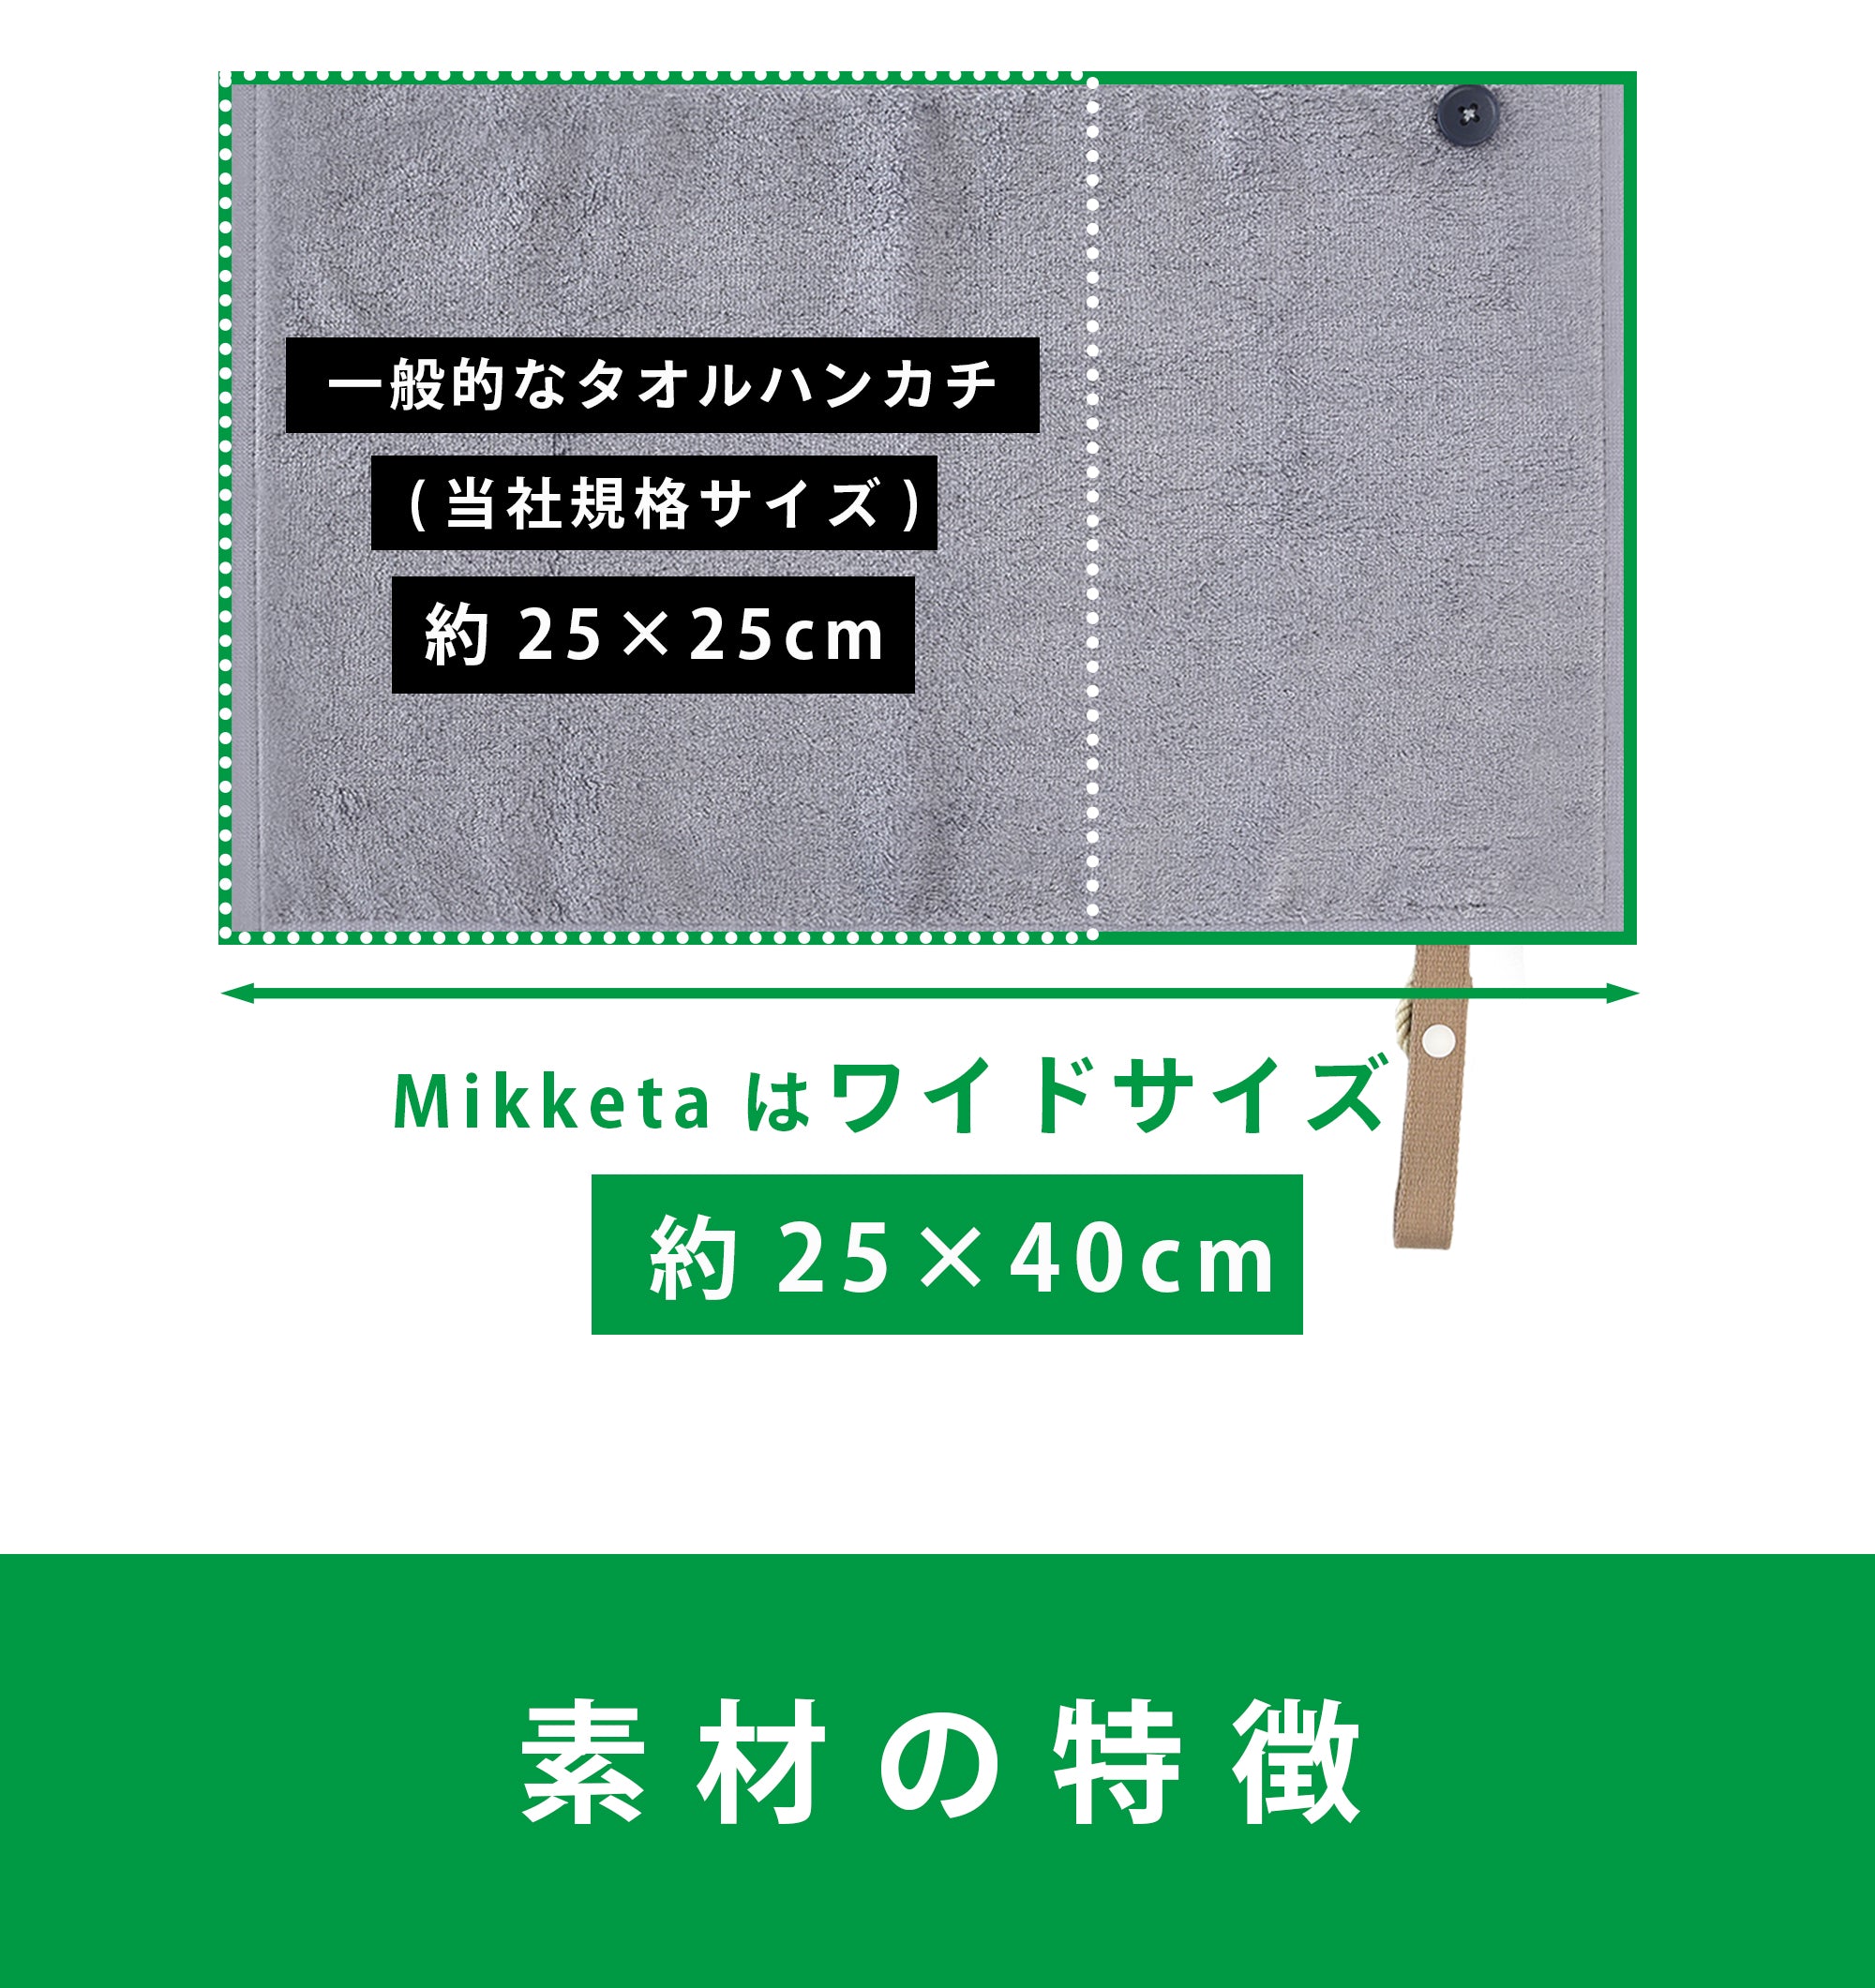 Mikketaはワイドサイズ。約25×40cm。素材の特徴。